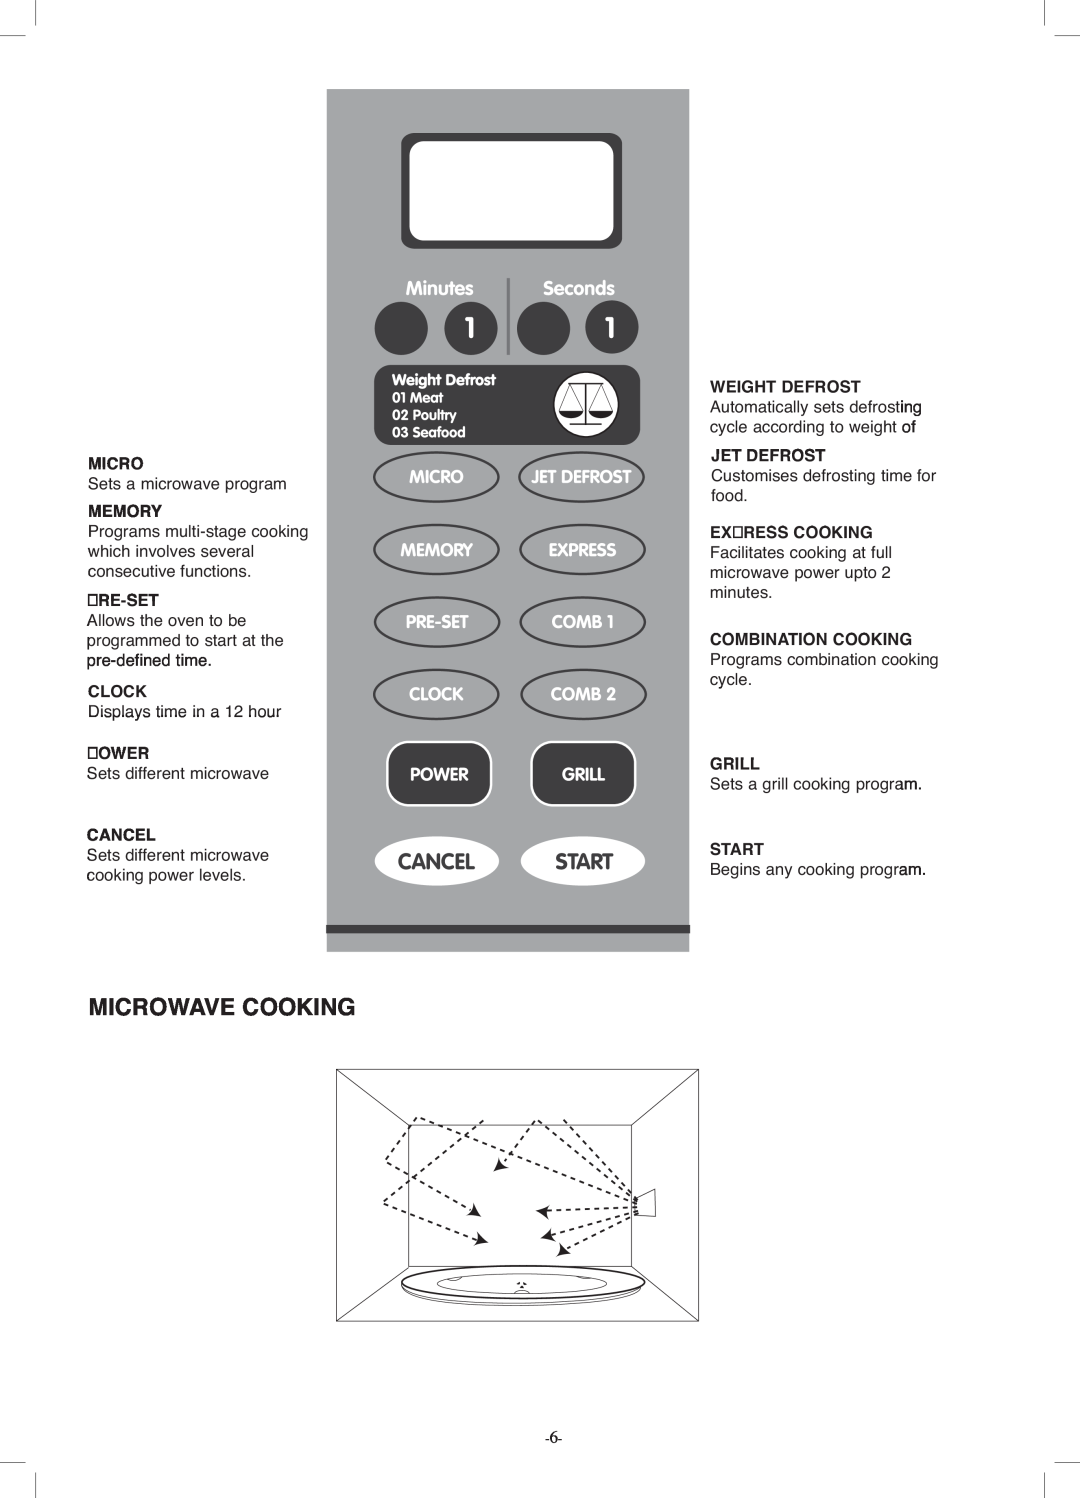 Black & Decker MX30PGSS manual 0,&52:$9&22.,1*, 0025<, 3567, 32:5, $1, +75267, 3566&22.,1, 20%,1$7,21&22.,1, 67$57 